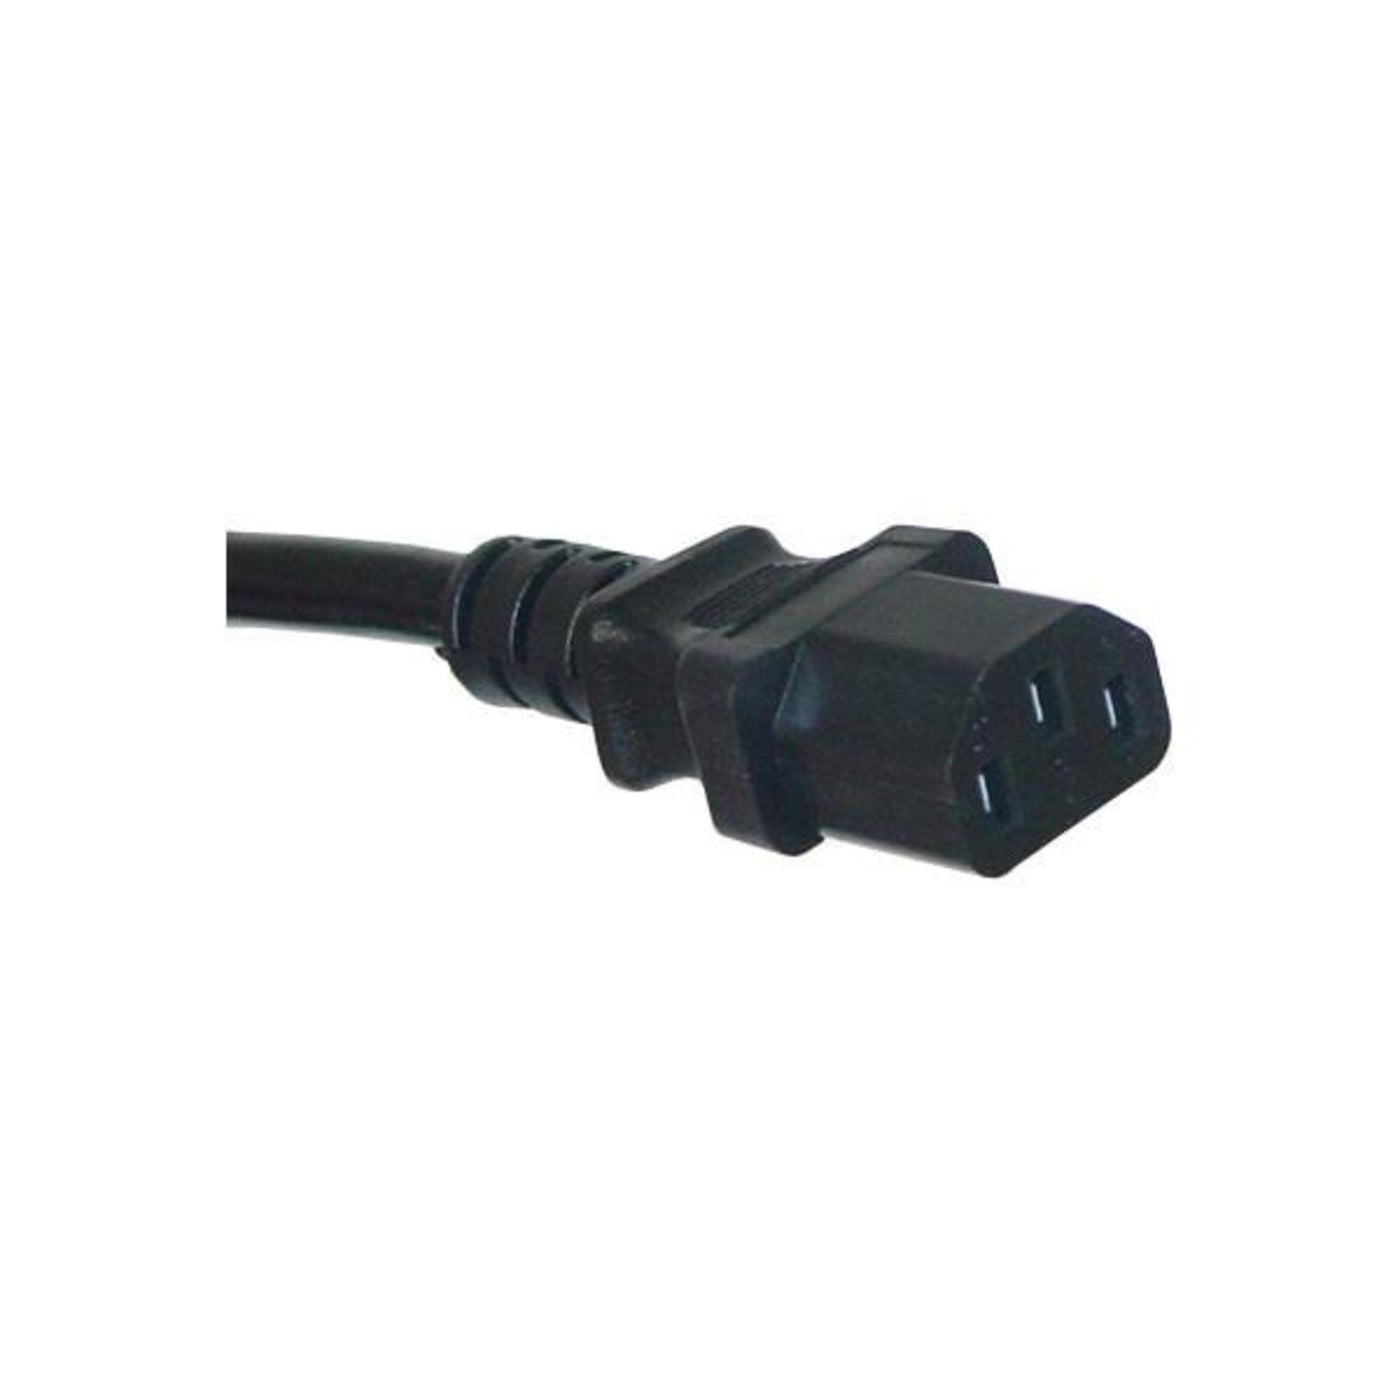 Blizzard Cool Cable 123812 IEC/EDISON-25FT IEC Power Cable